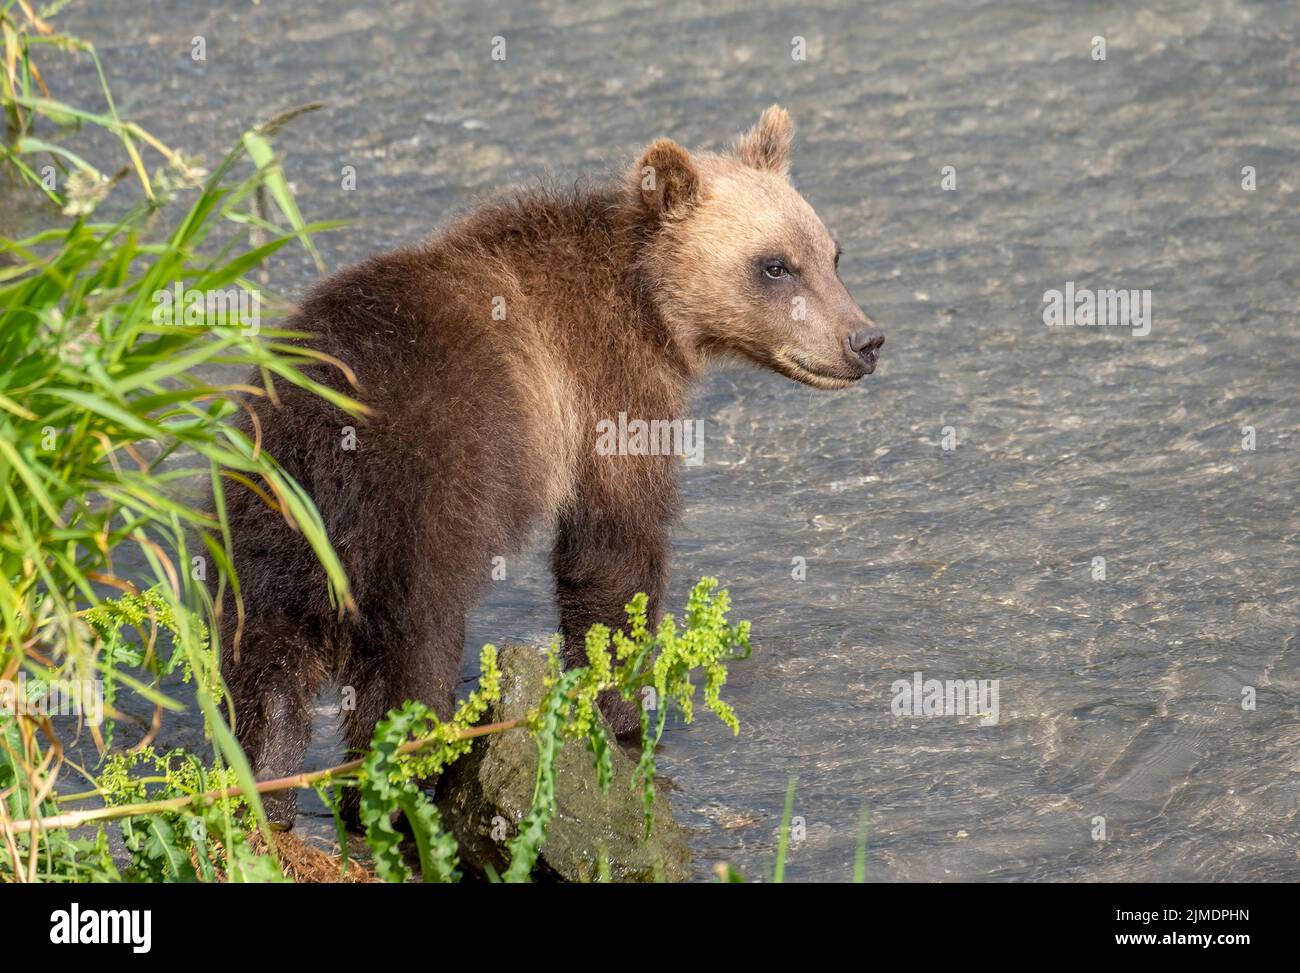 Brown bear cub in river Stock Photo